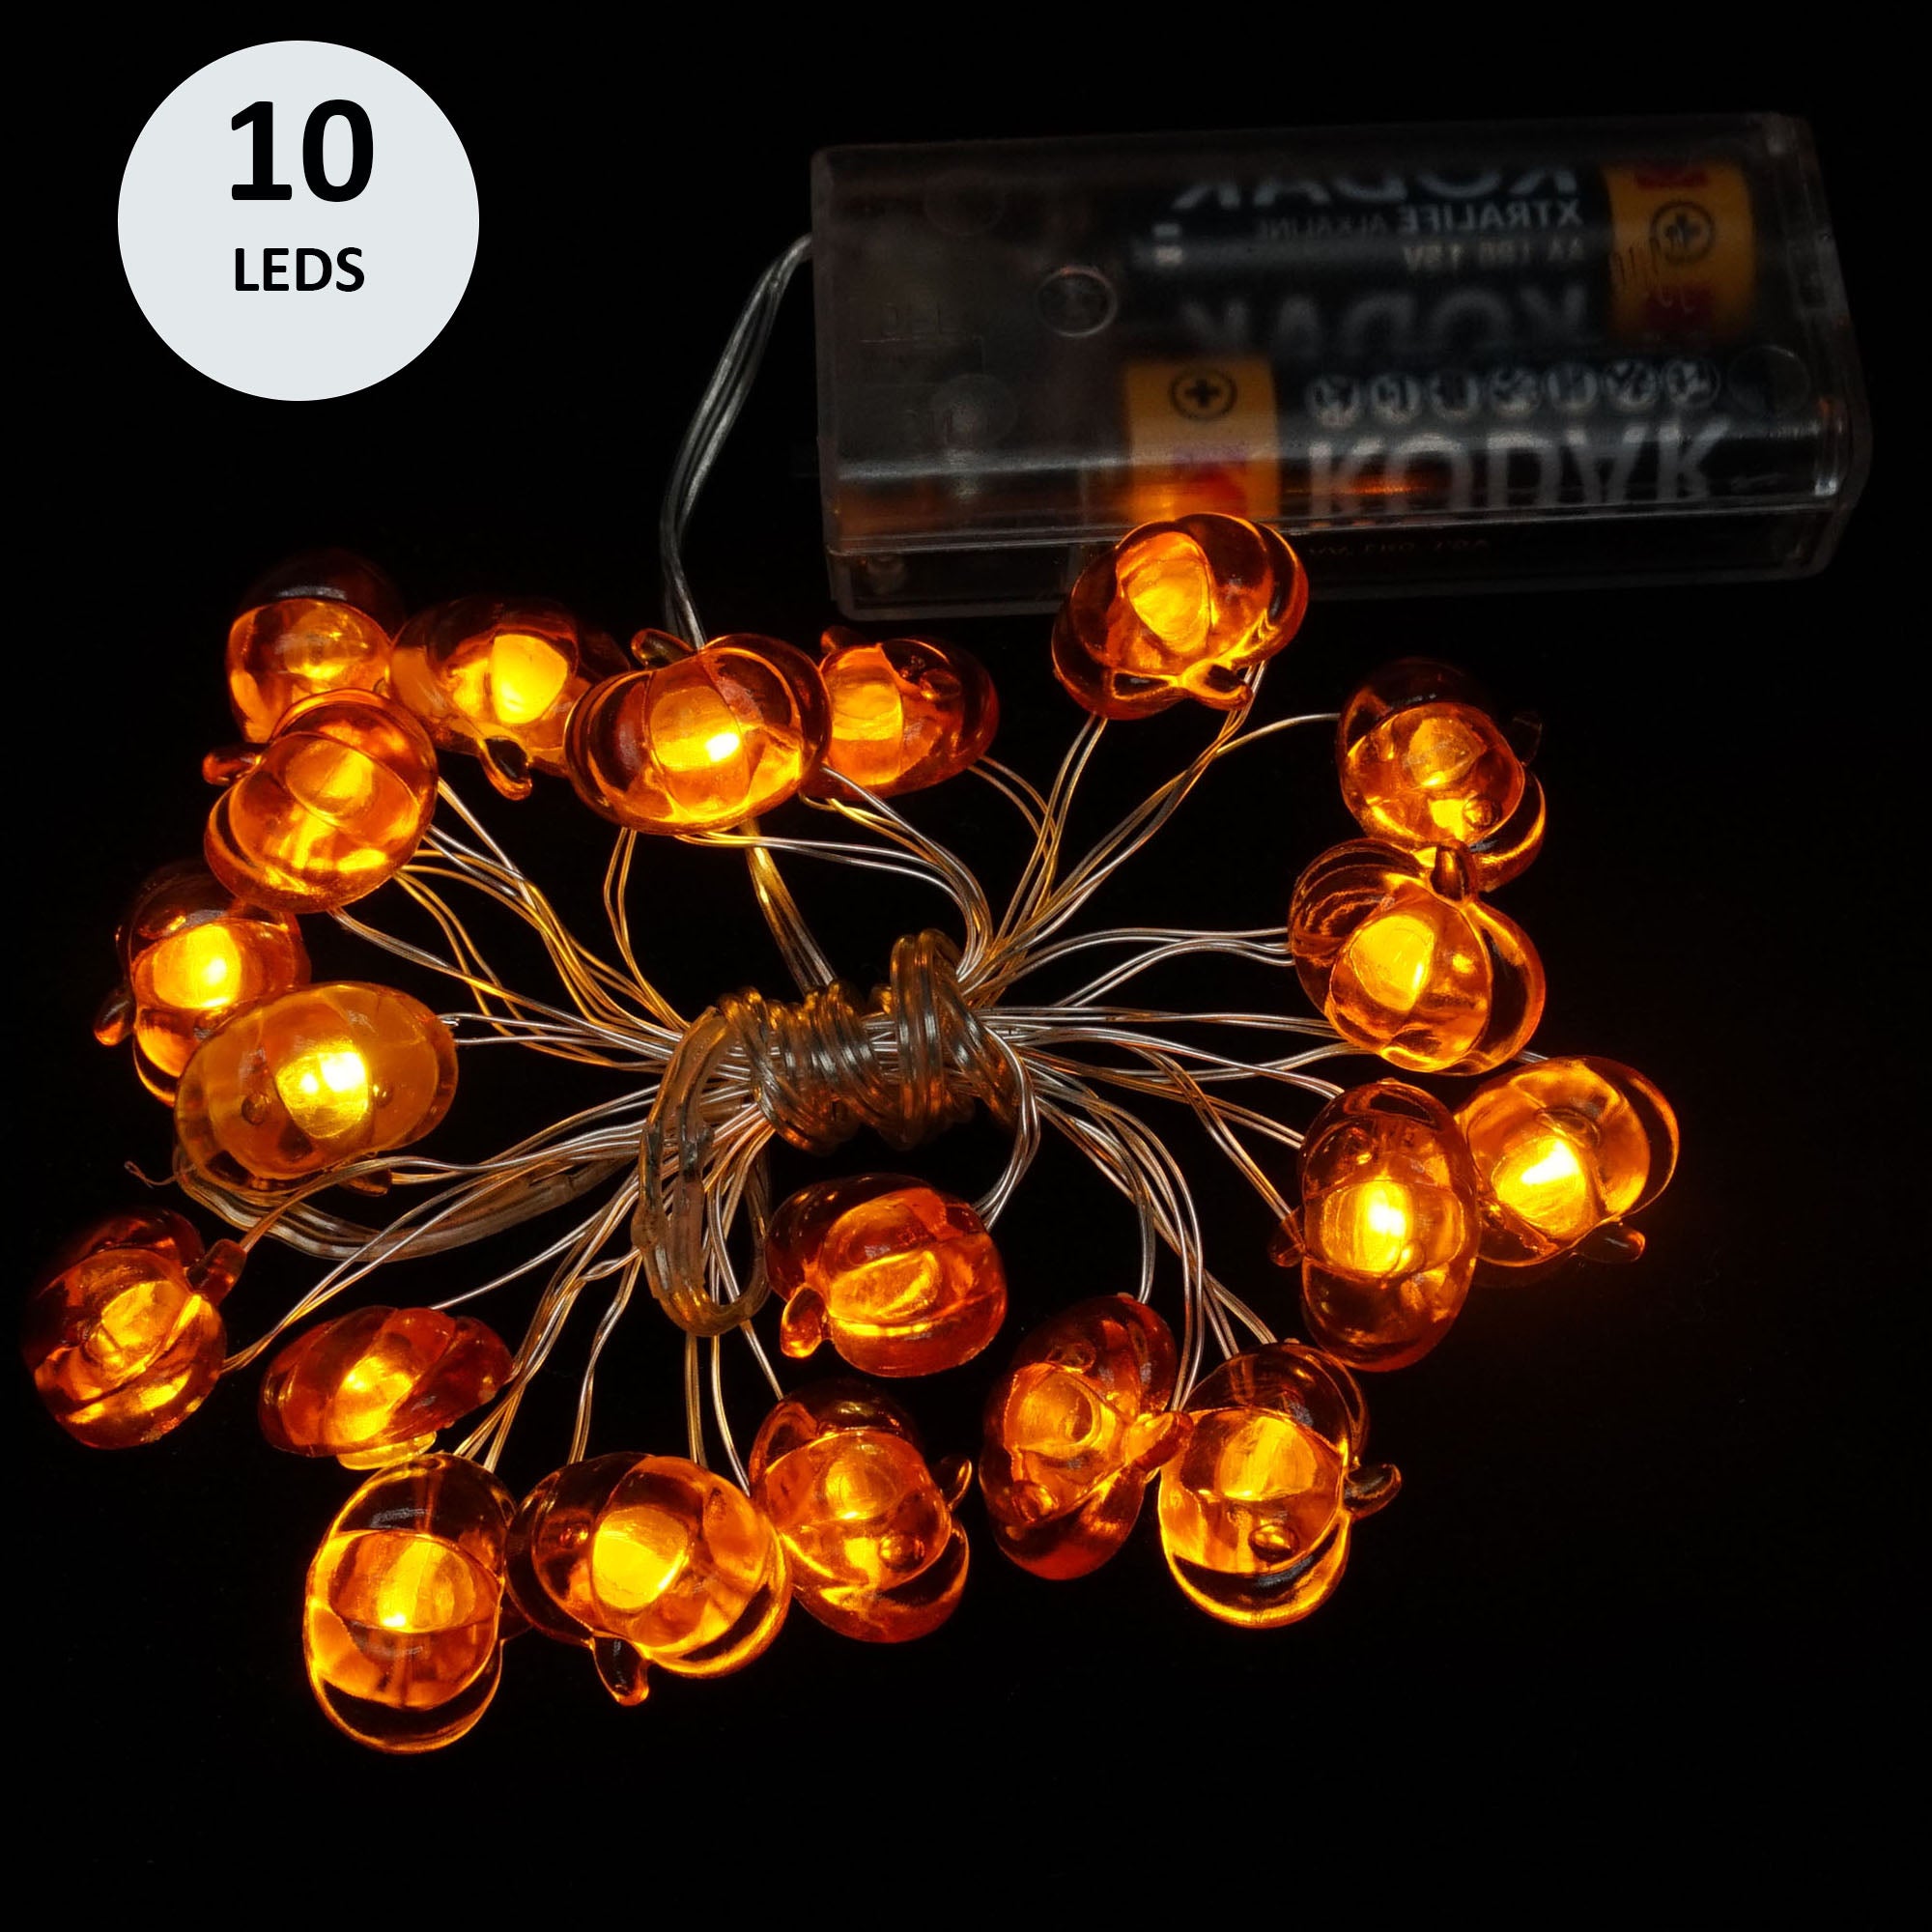 Hanging String Leds Lights Battery Operated Orange